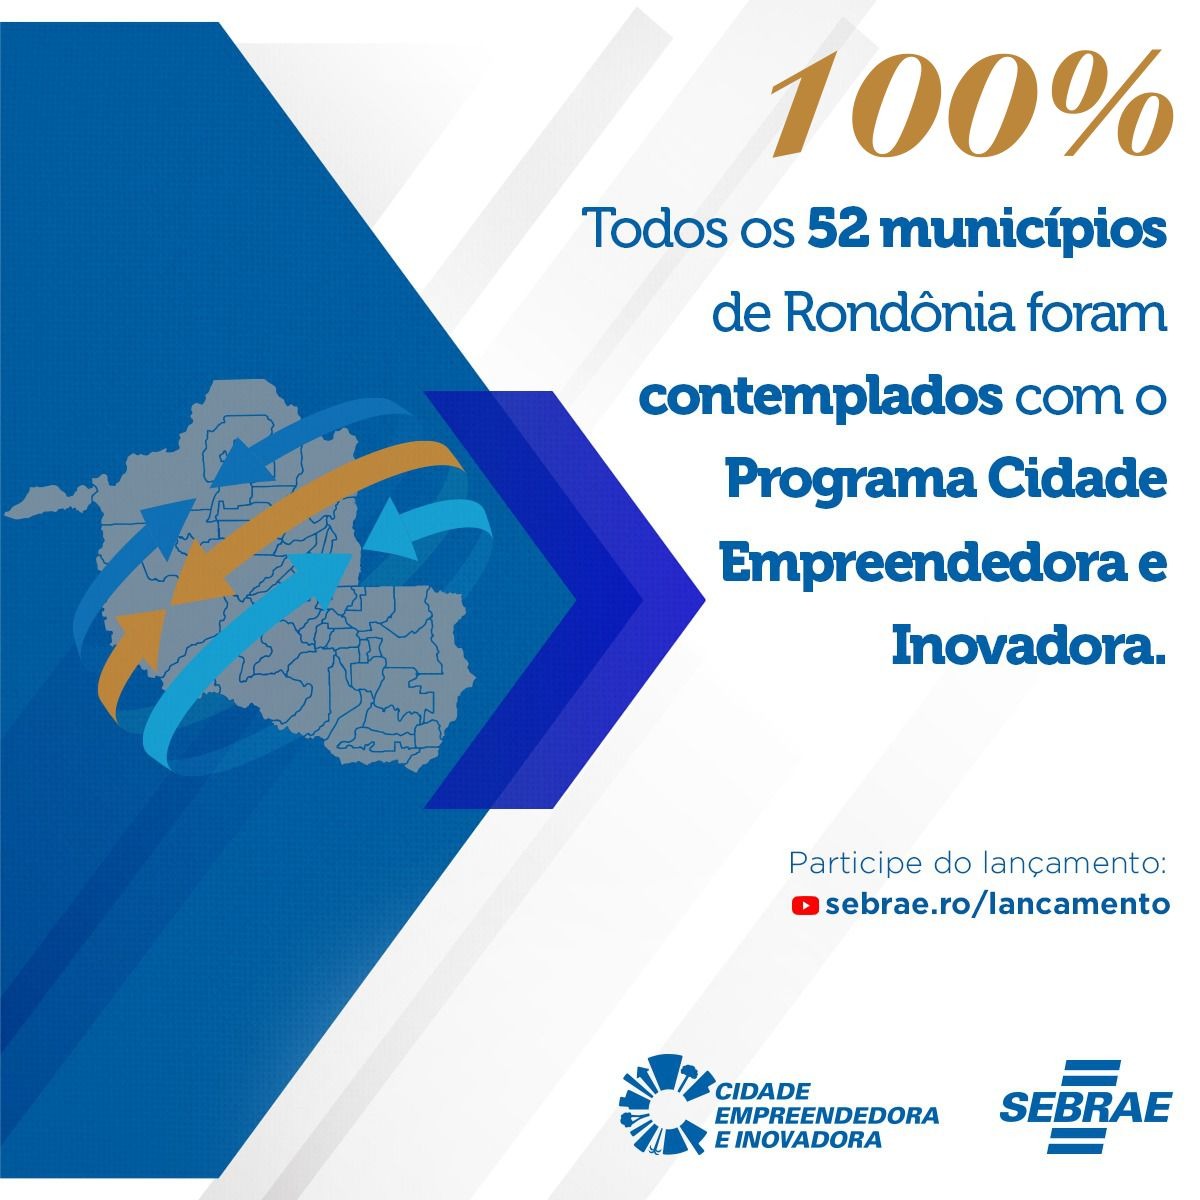 DESENVOLVIMENTO - Rondônia chega a 100% dos municípios aderindo ao programa Cidade Empreendedora - News Rondônia